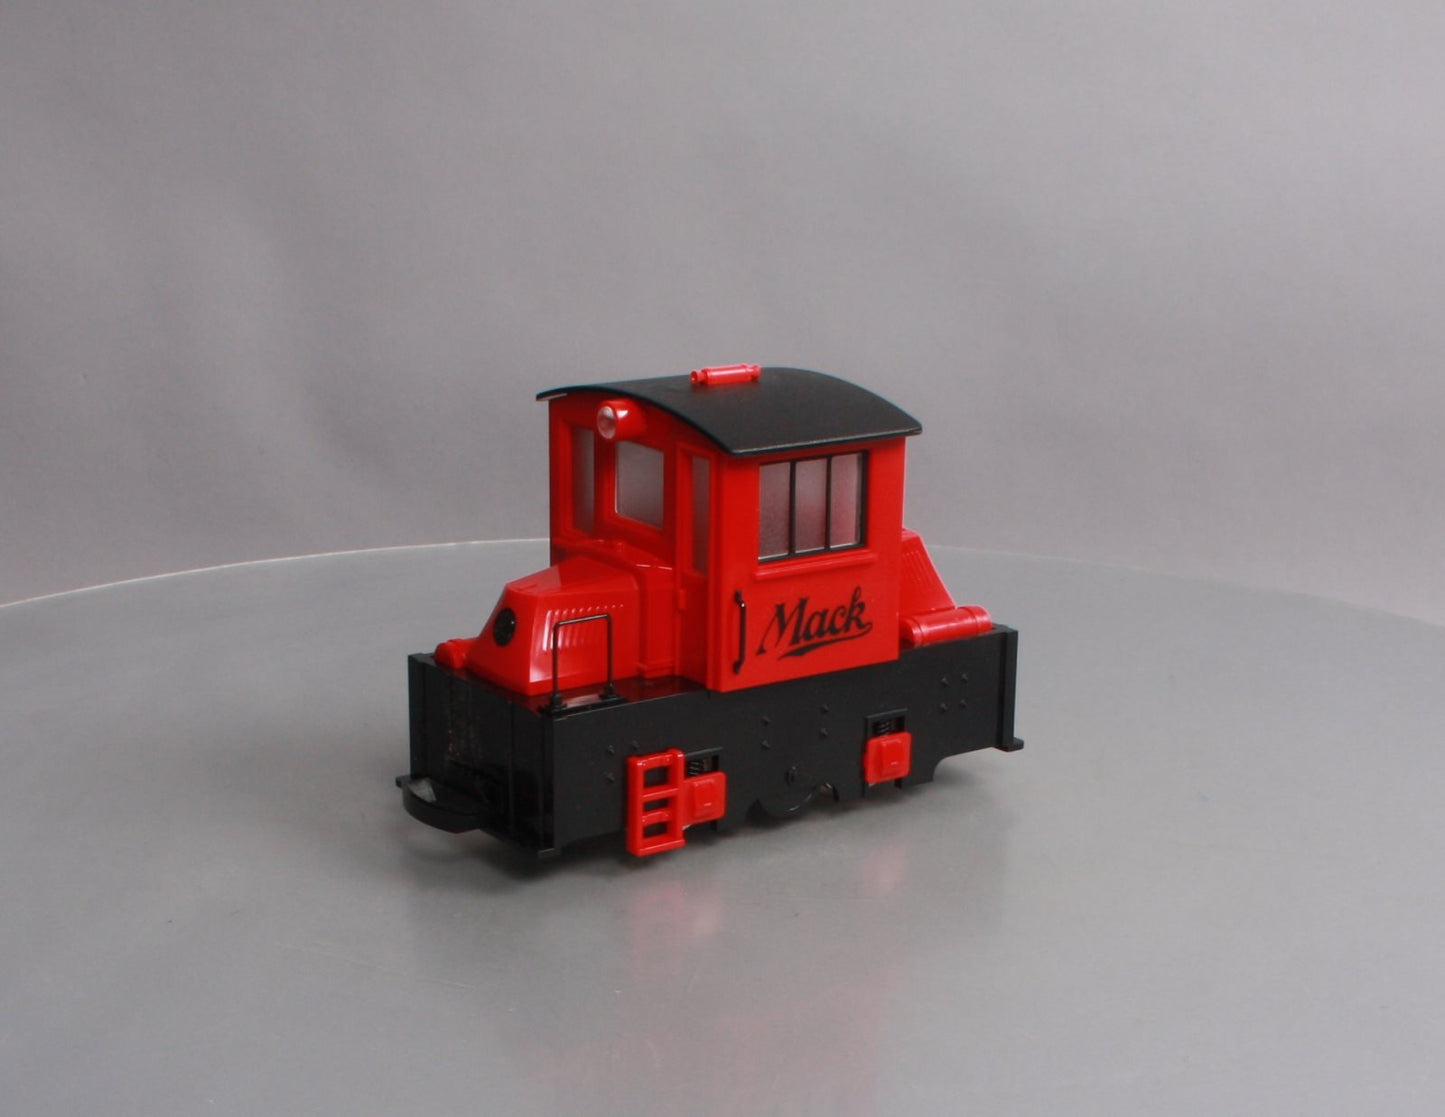 Hartland 09703 "G" Scale Red Mack Engine